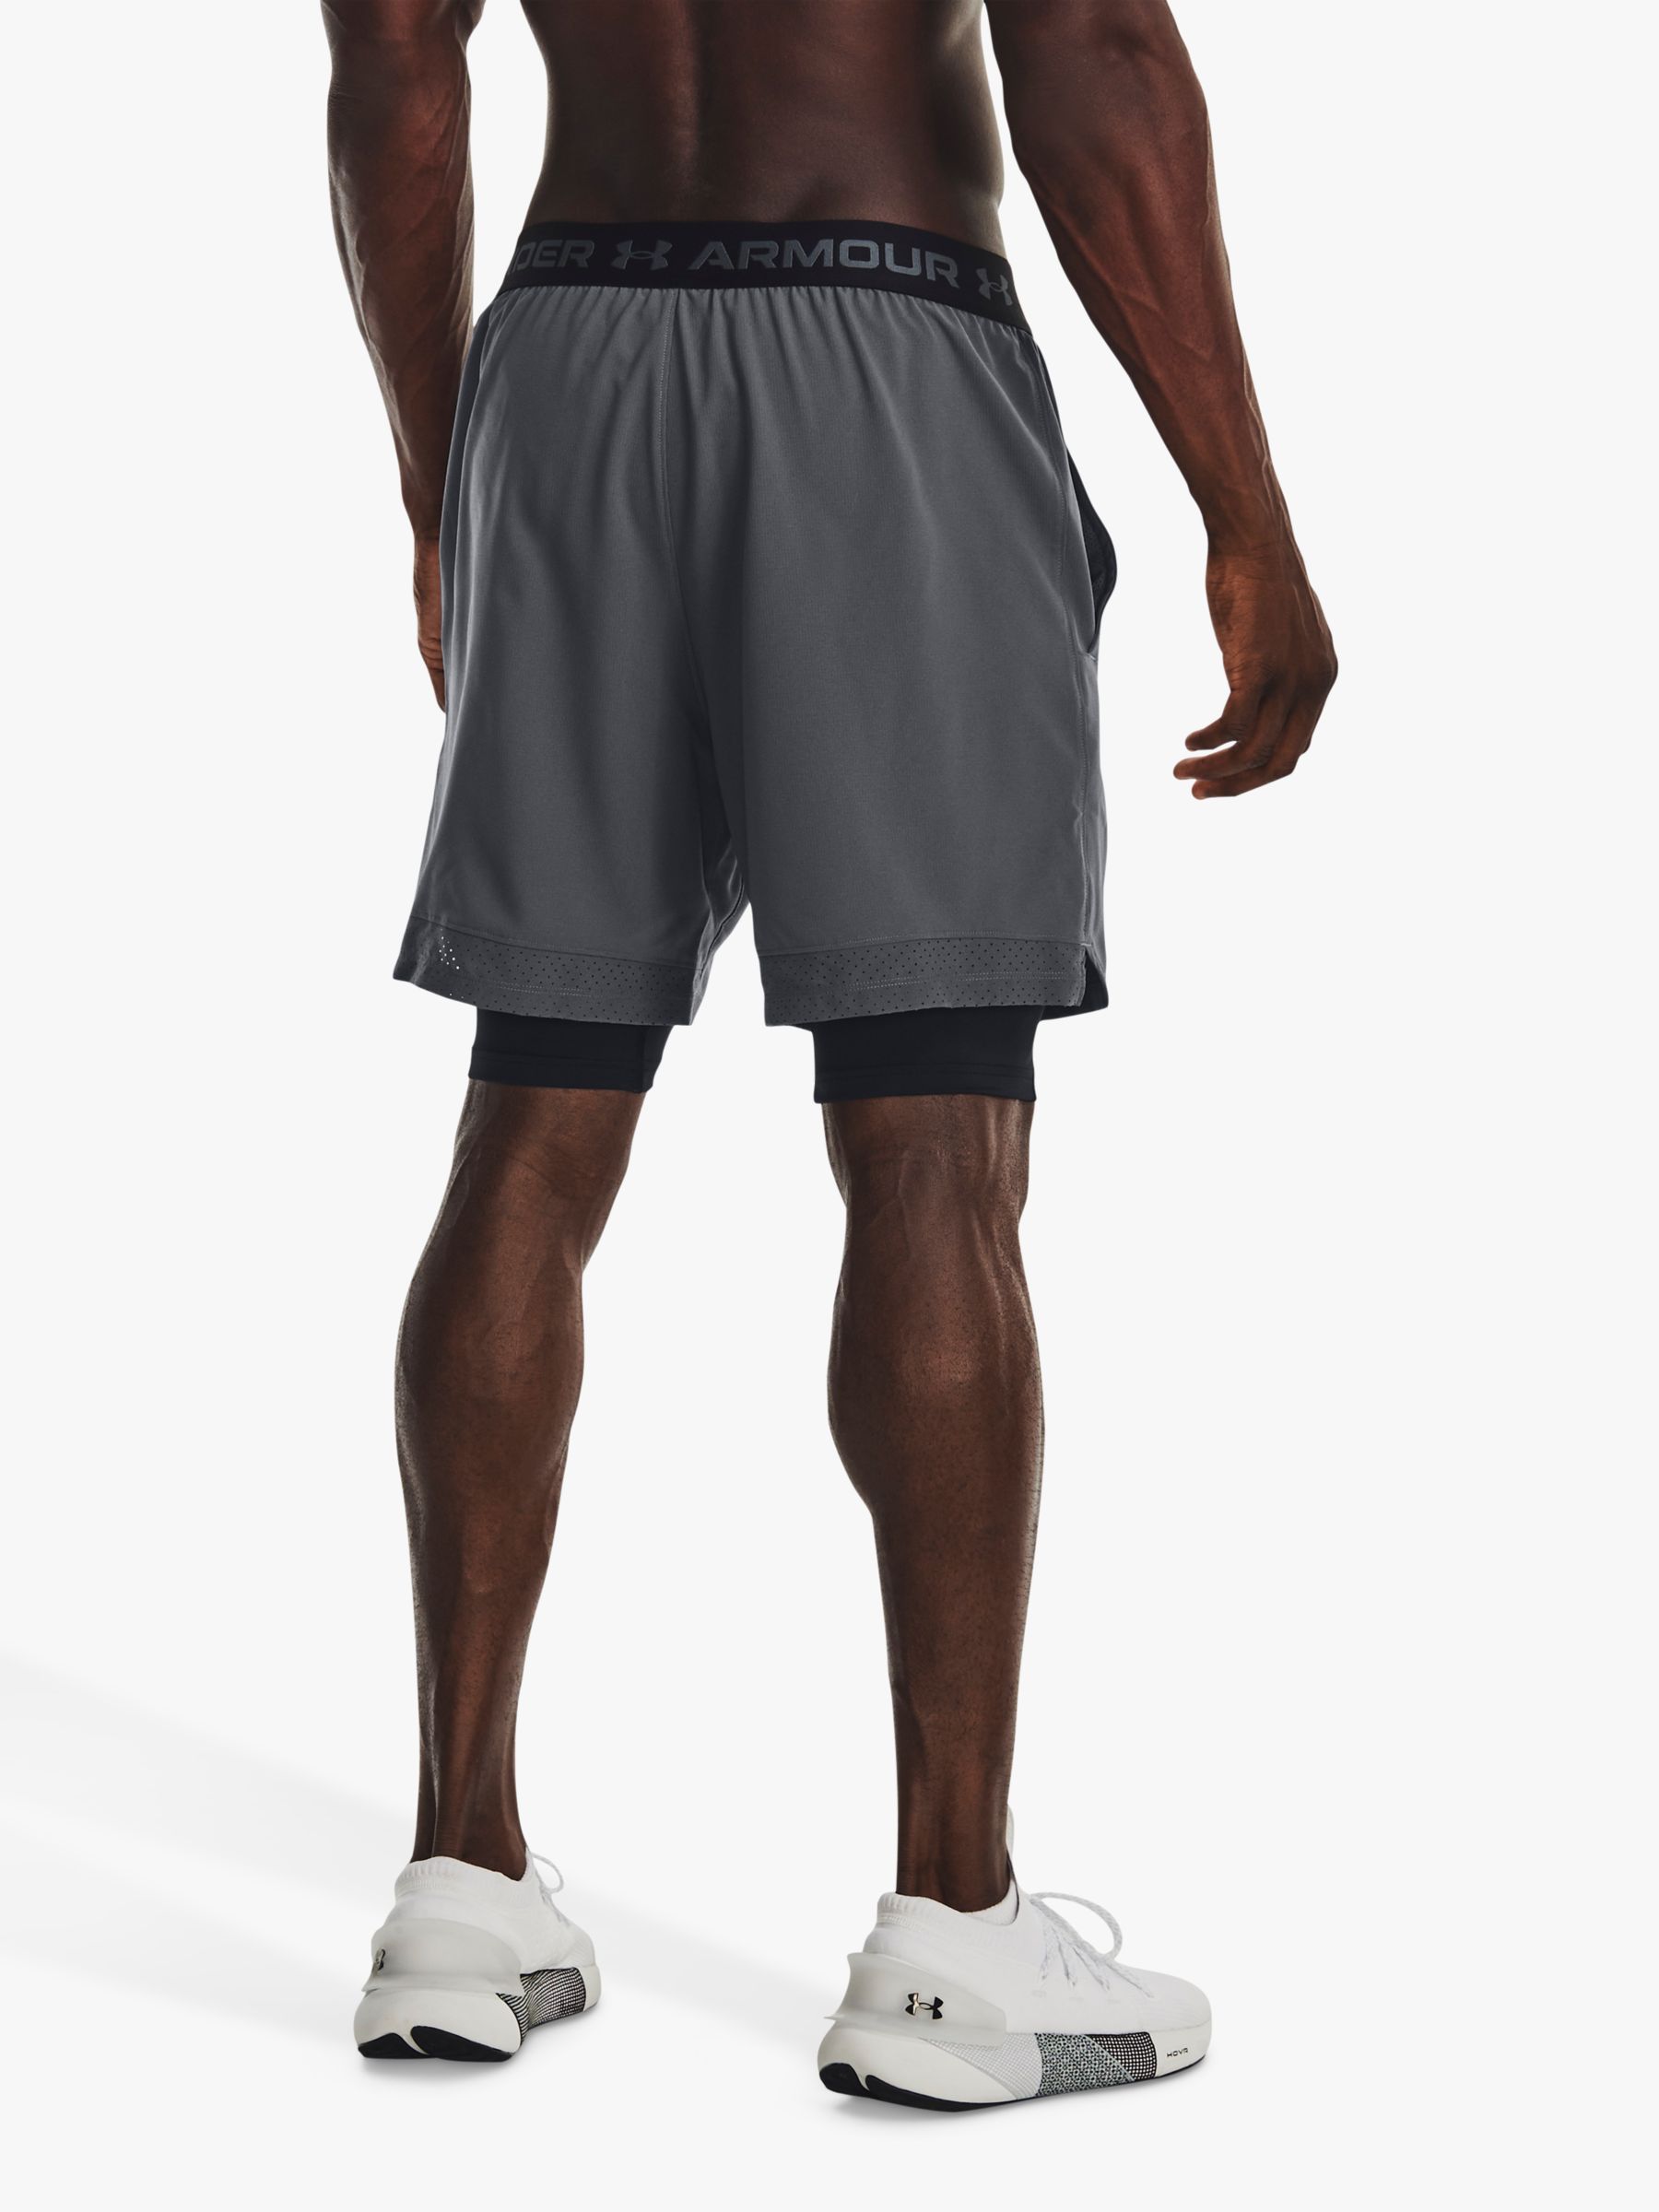 Men’s Under Armour Flat Front Basketball Shorts Pockets Logo Black Size  Large